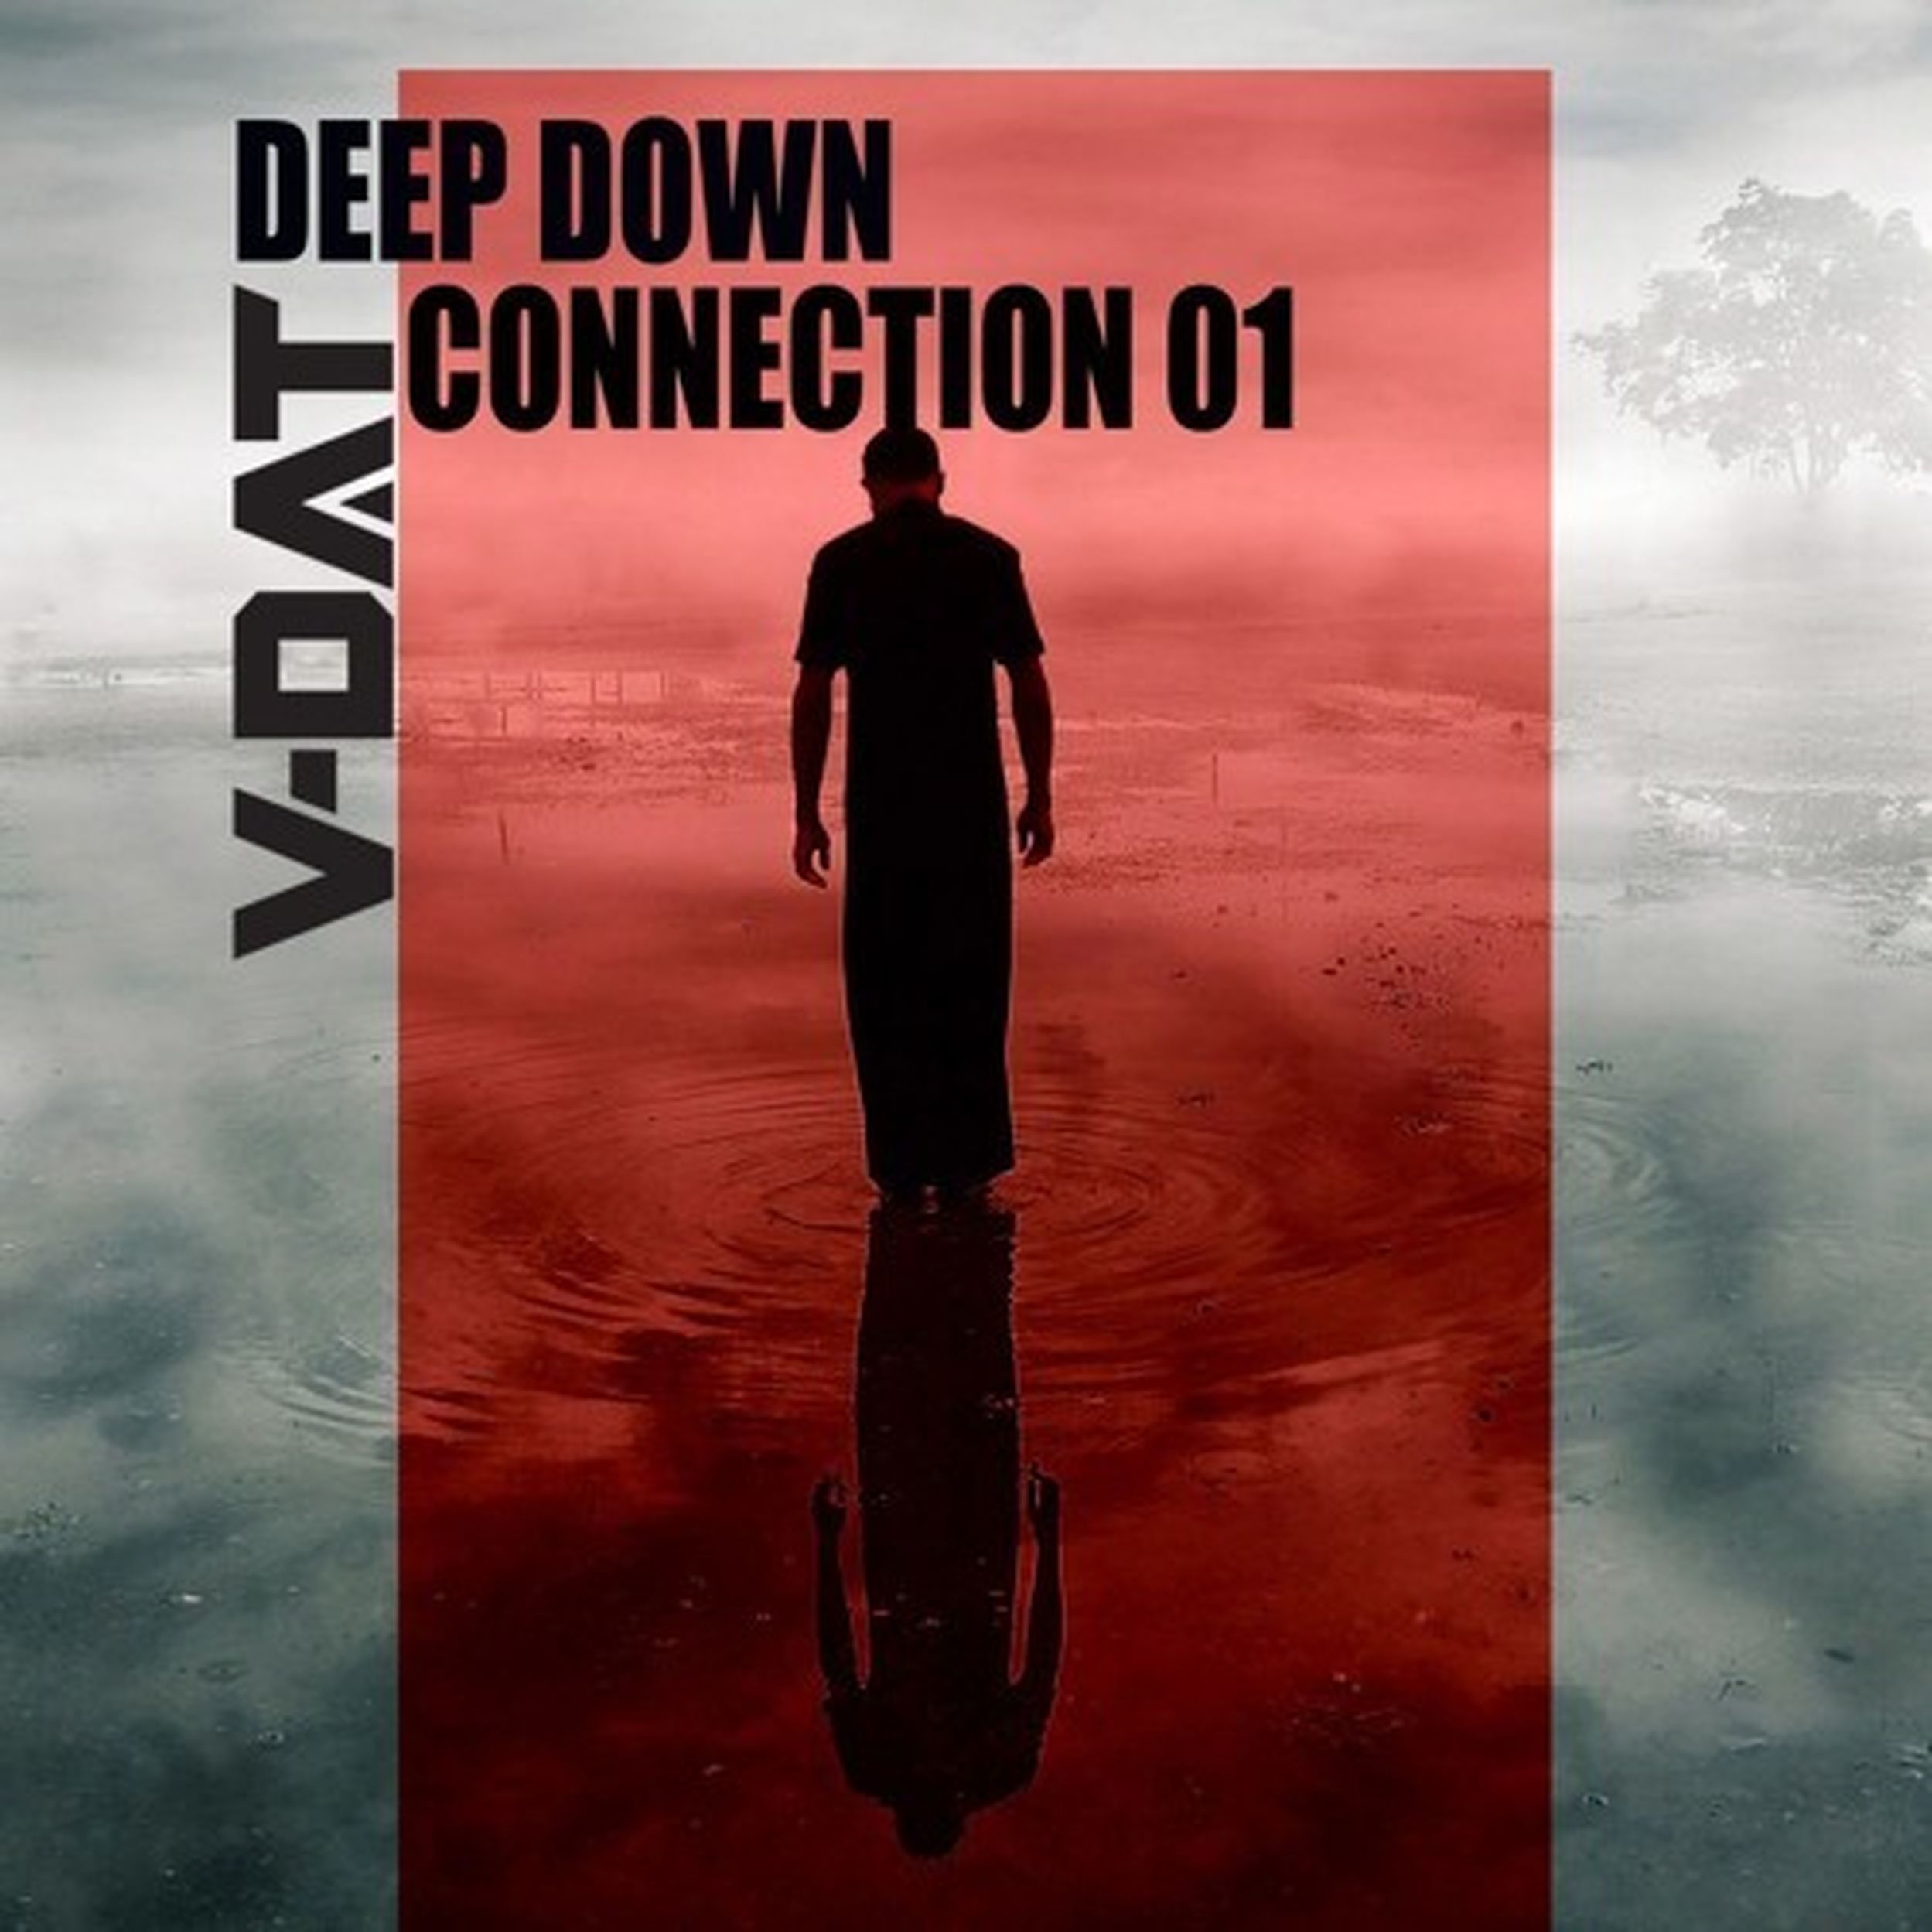 Please power down and connect the. The Sun v-dat. Bob Downes "Deep down Heavy". Deeper down. Ай дип э довн а дип.